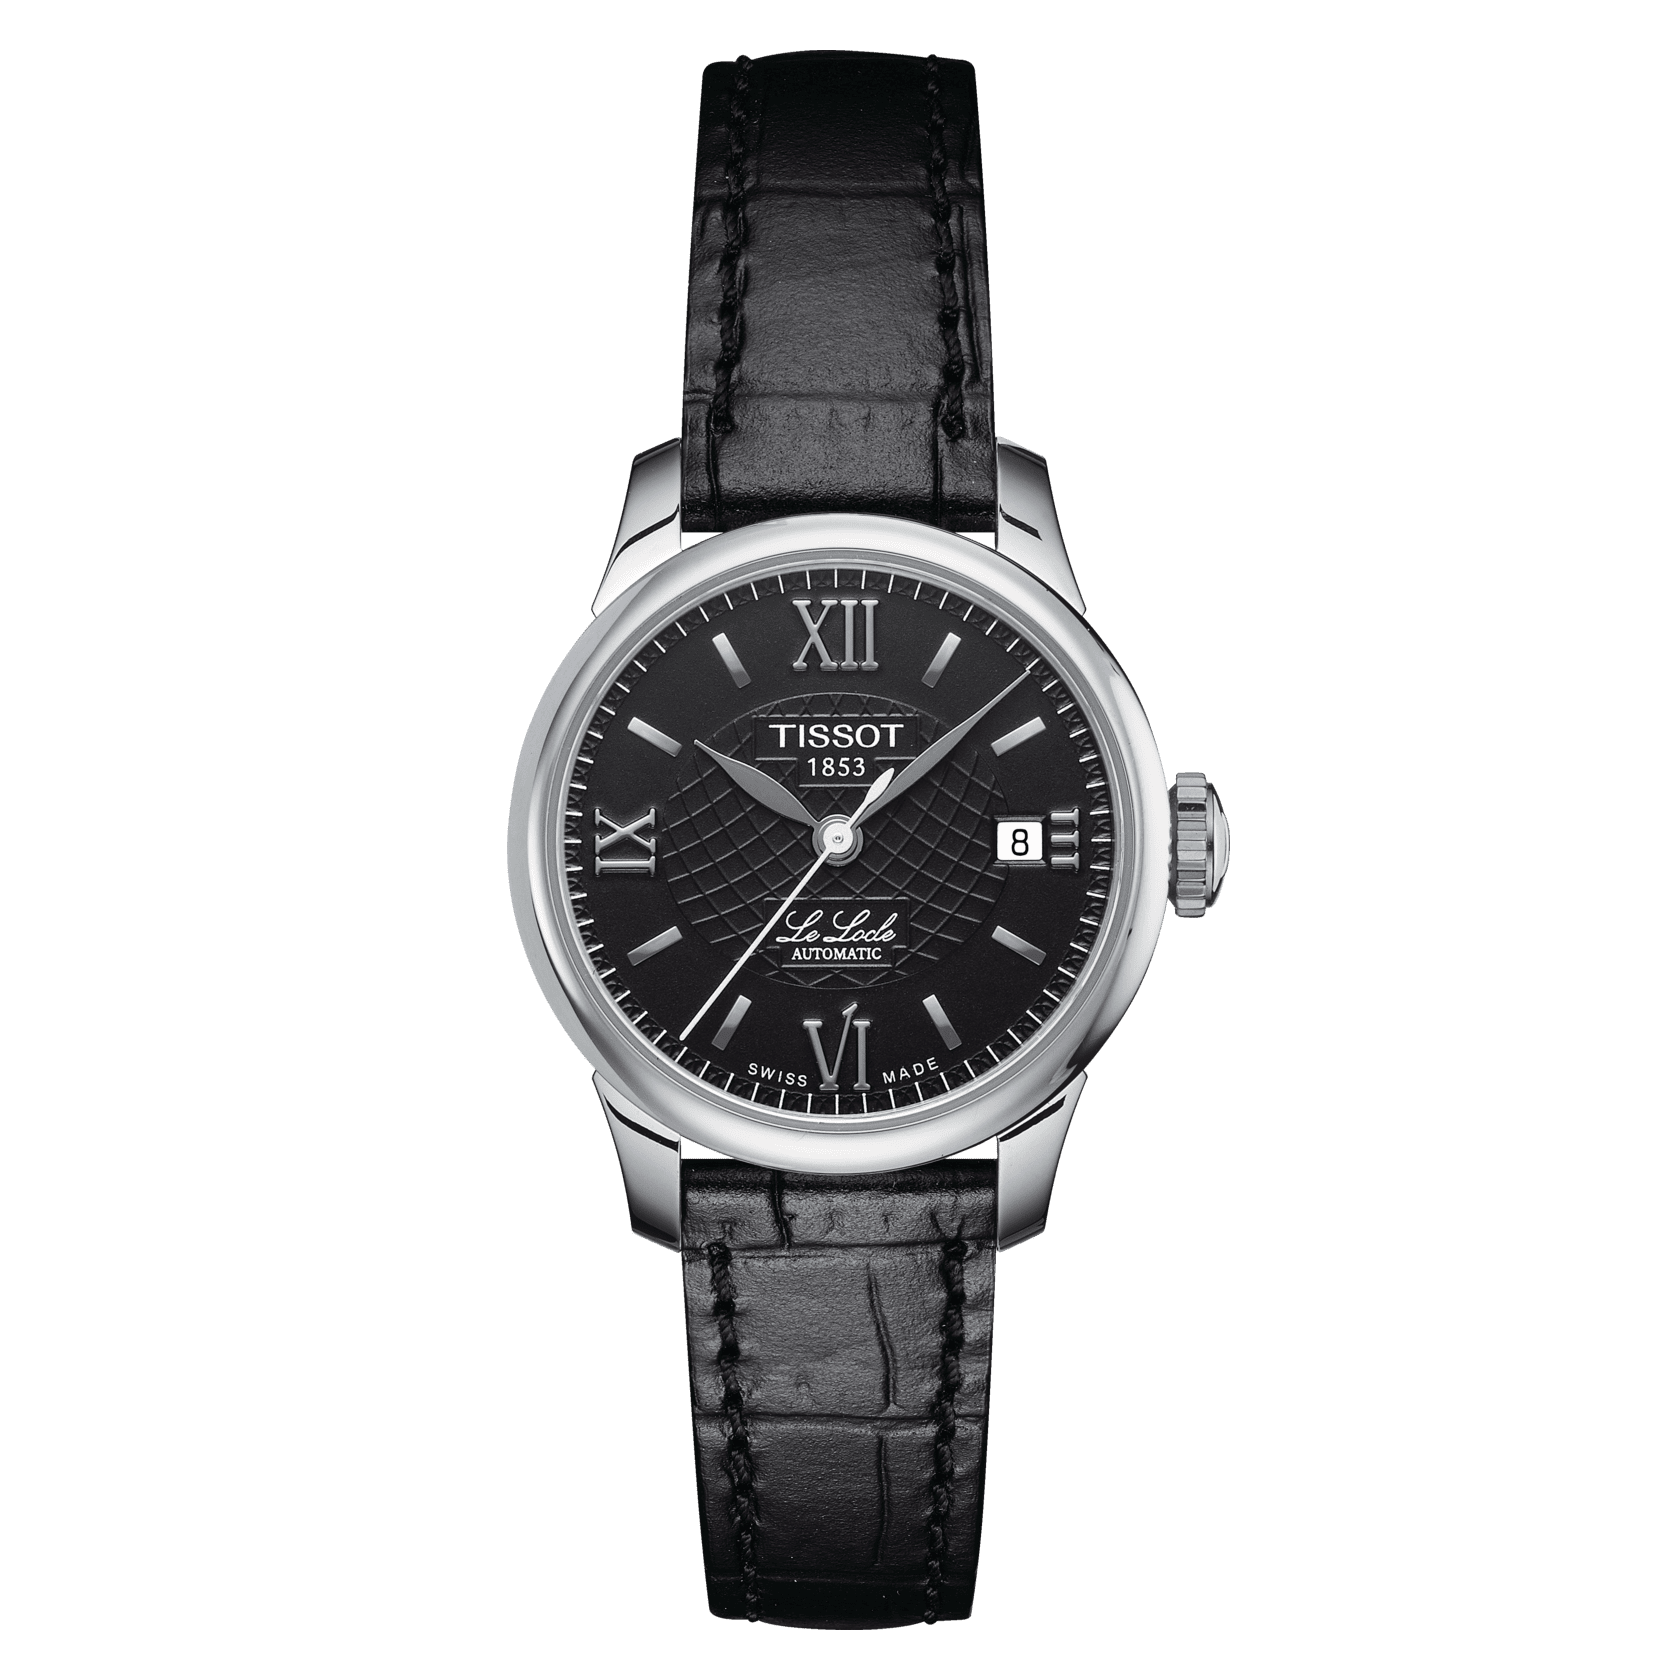 Replica Piaget Watch